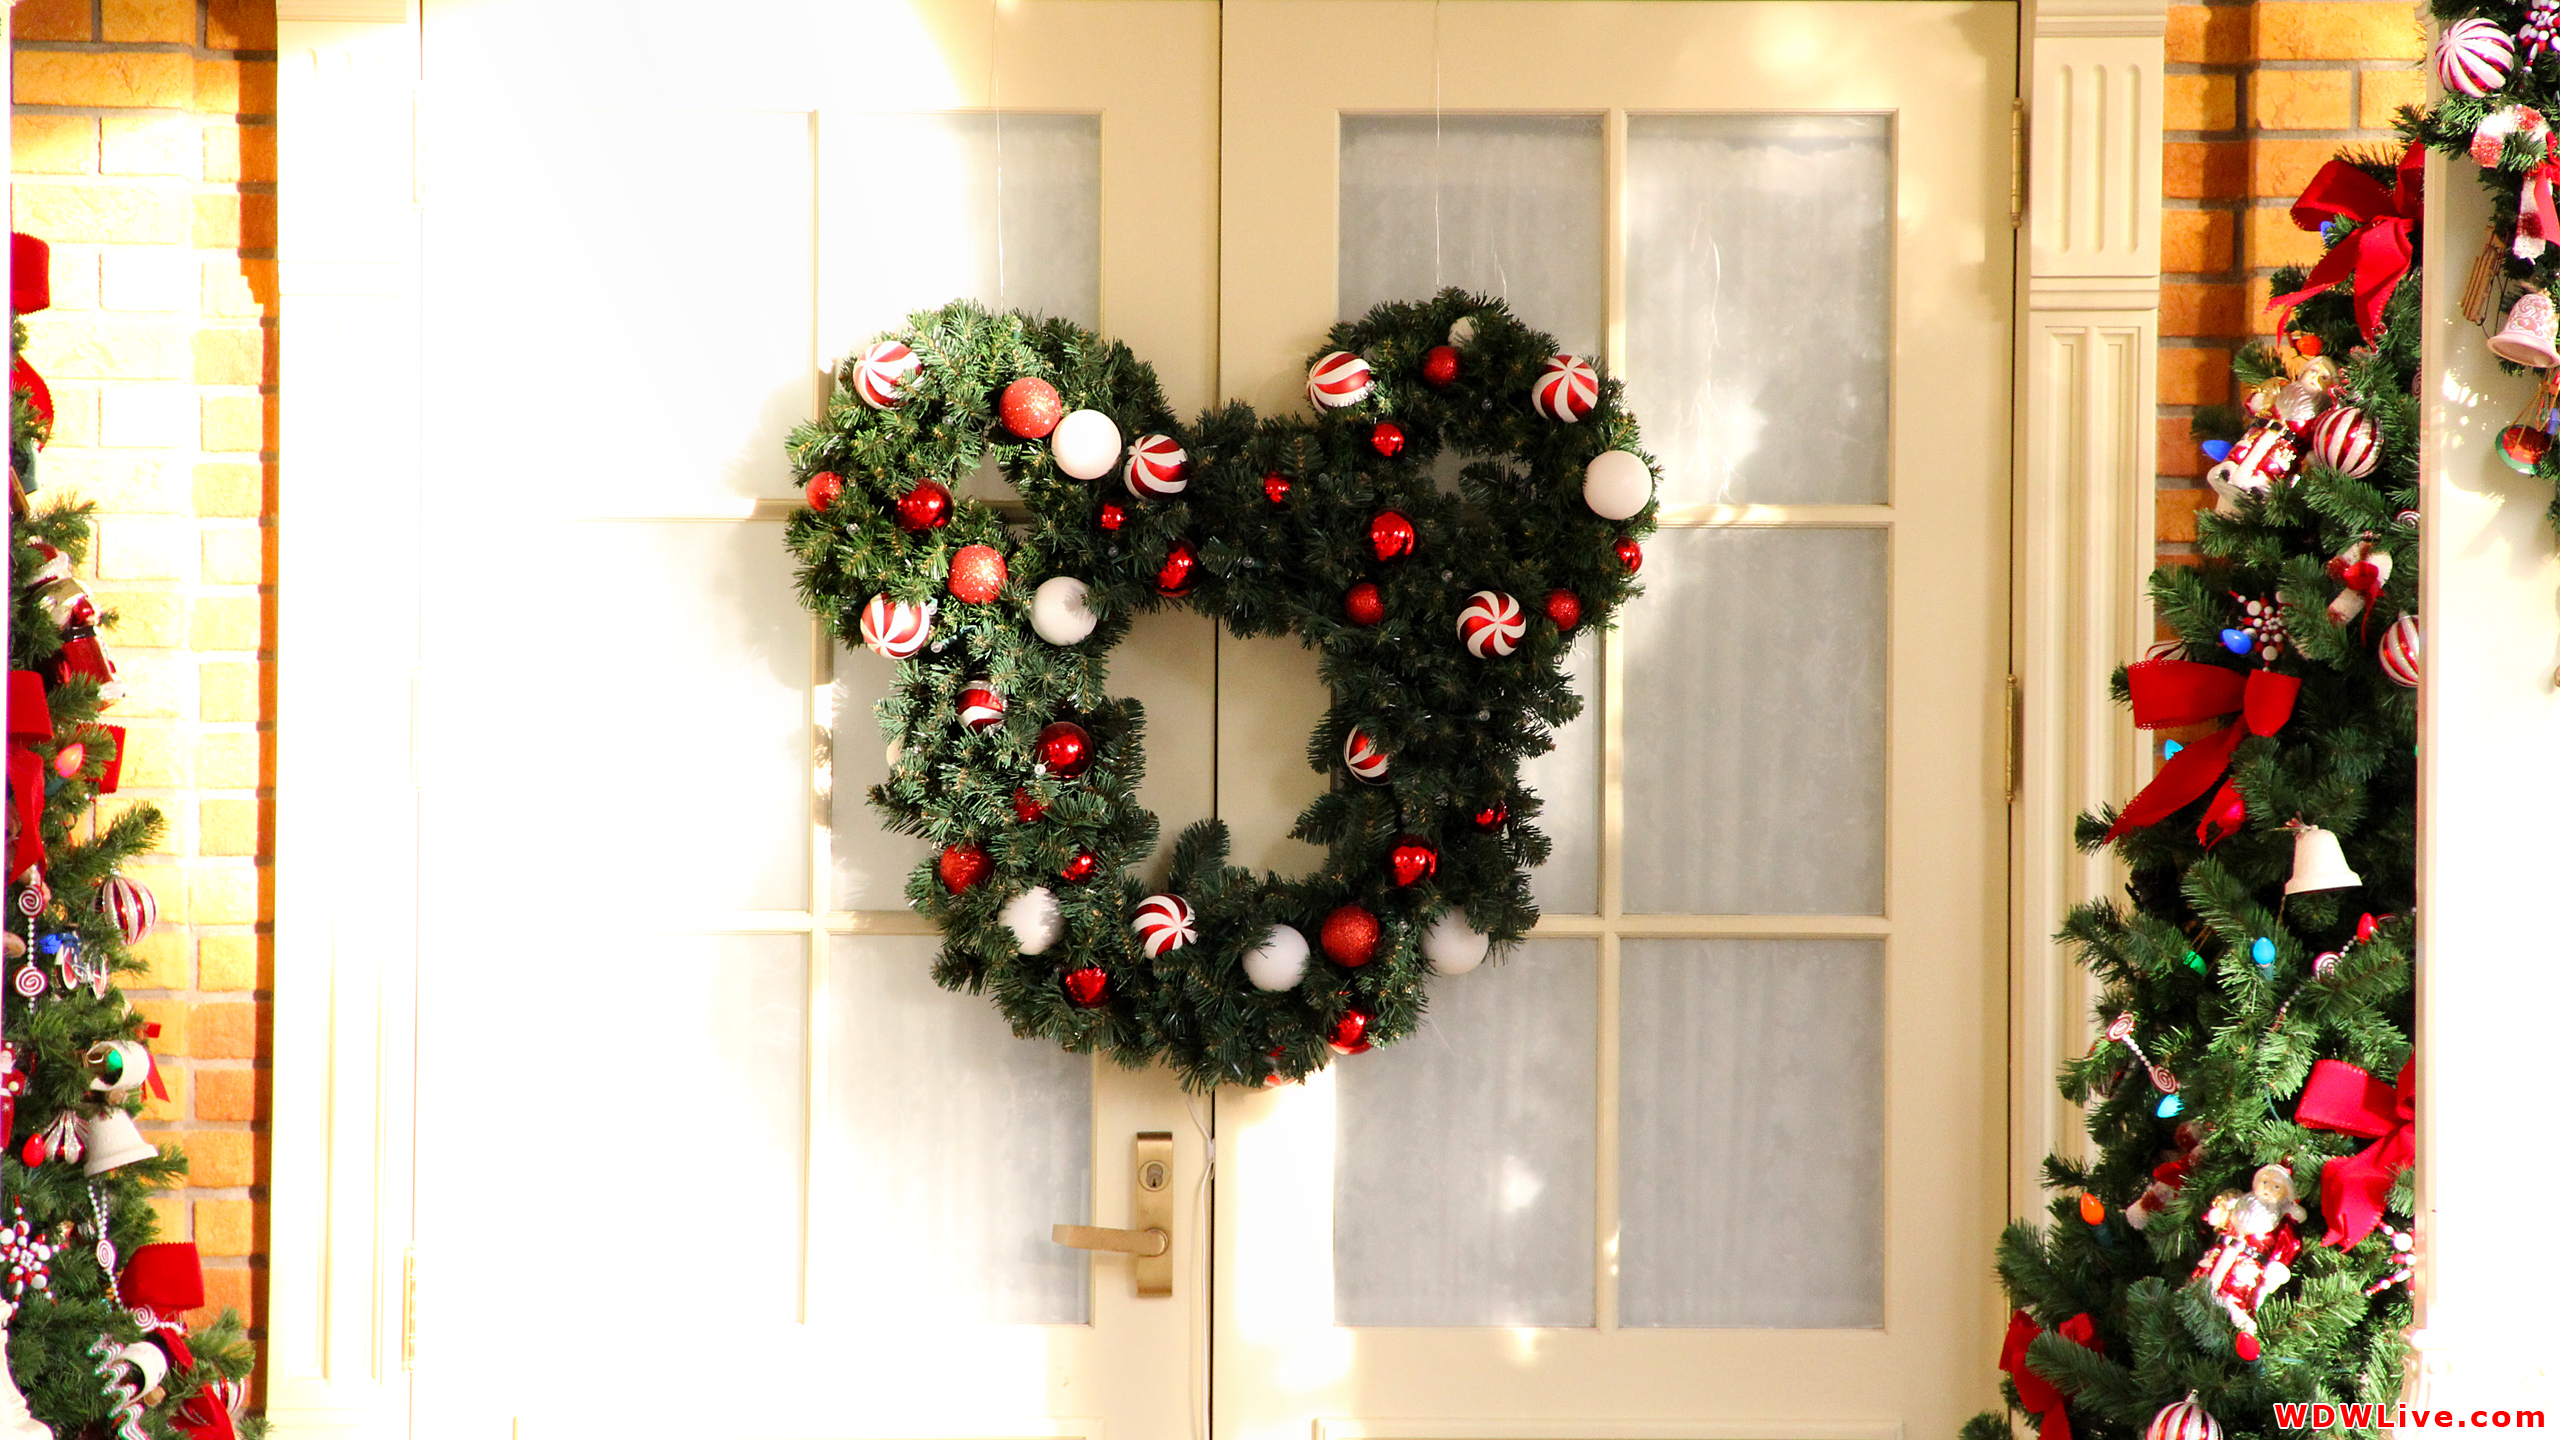 Christmas Wreath On Door Wallpapers Hd - Christmas Wreaths Disney World - HD Wallpaper 